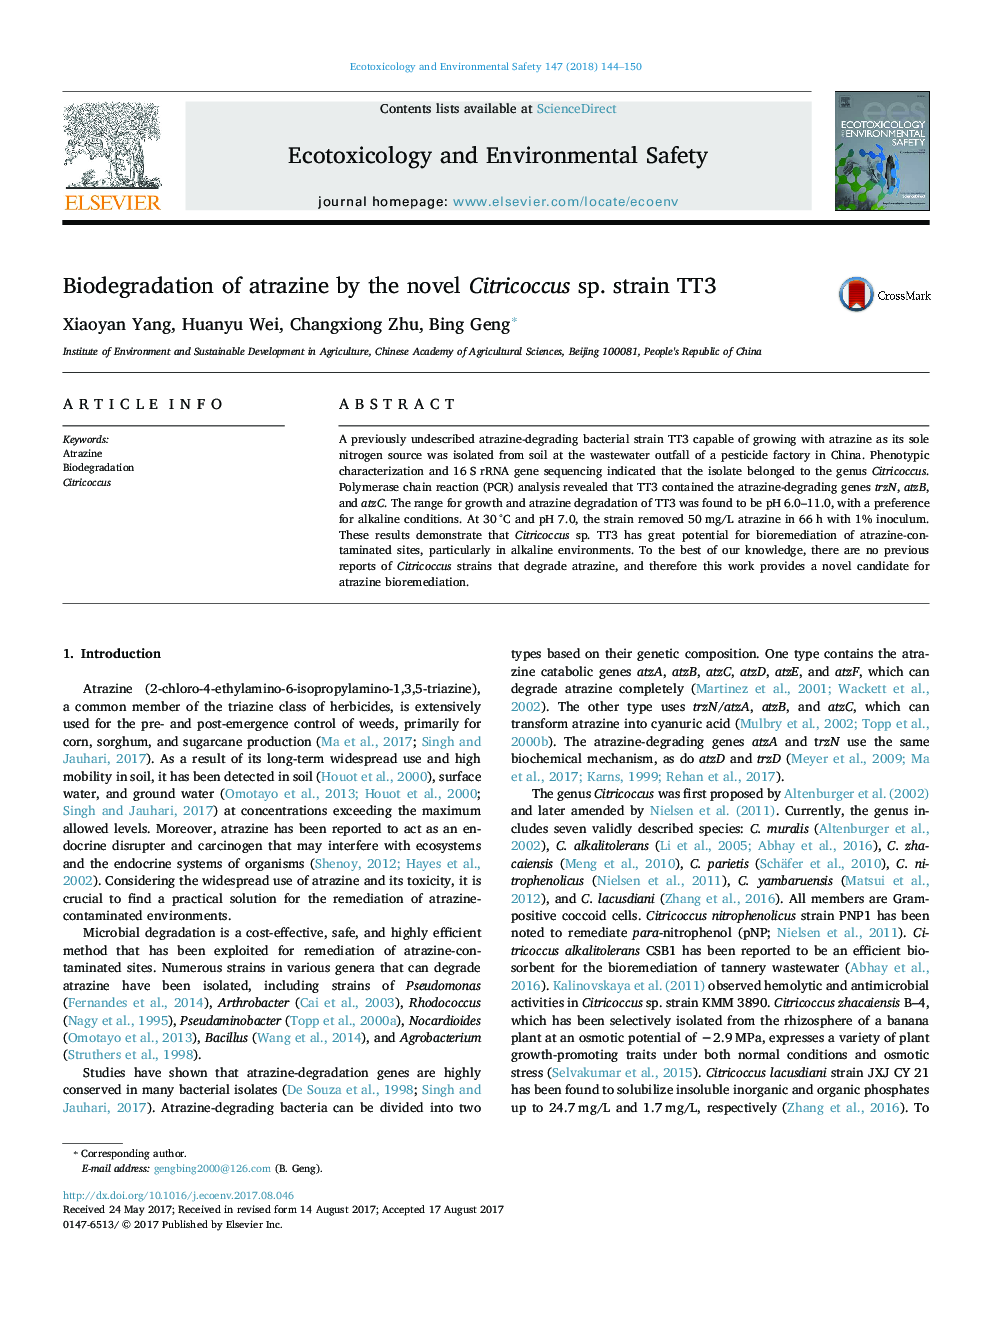 Biodegradation of atrazine by the novel Citricoccus sp. strain TT3